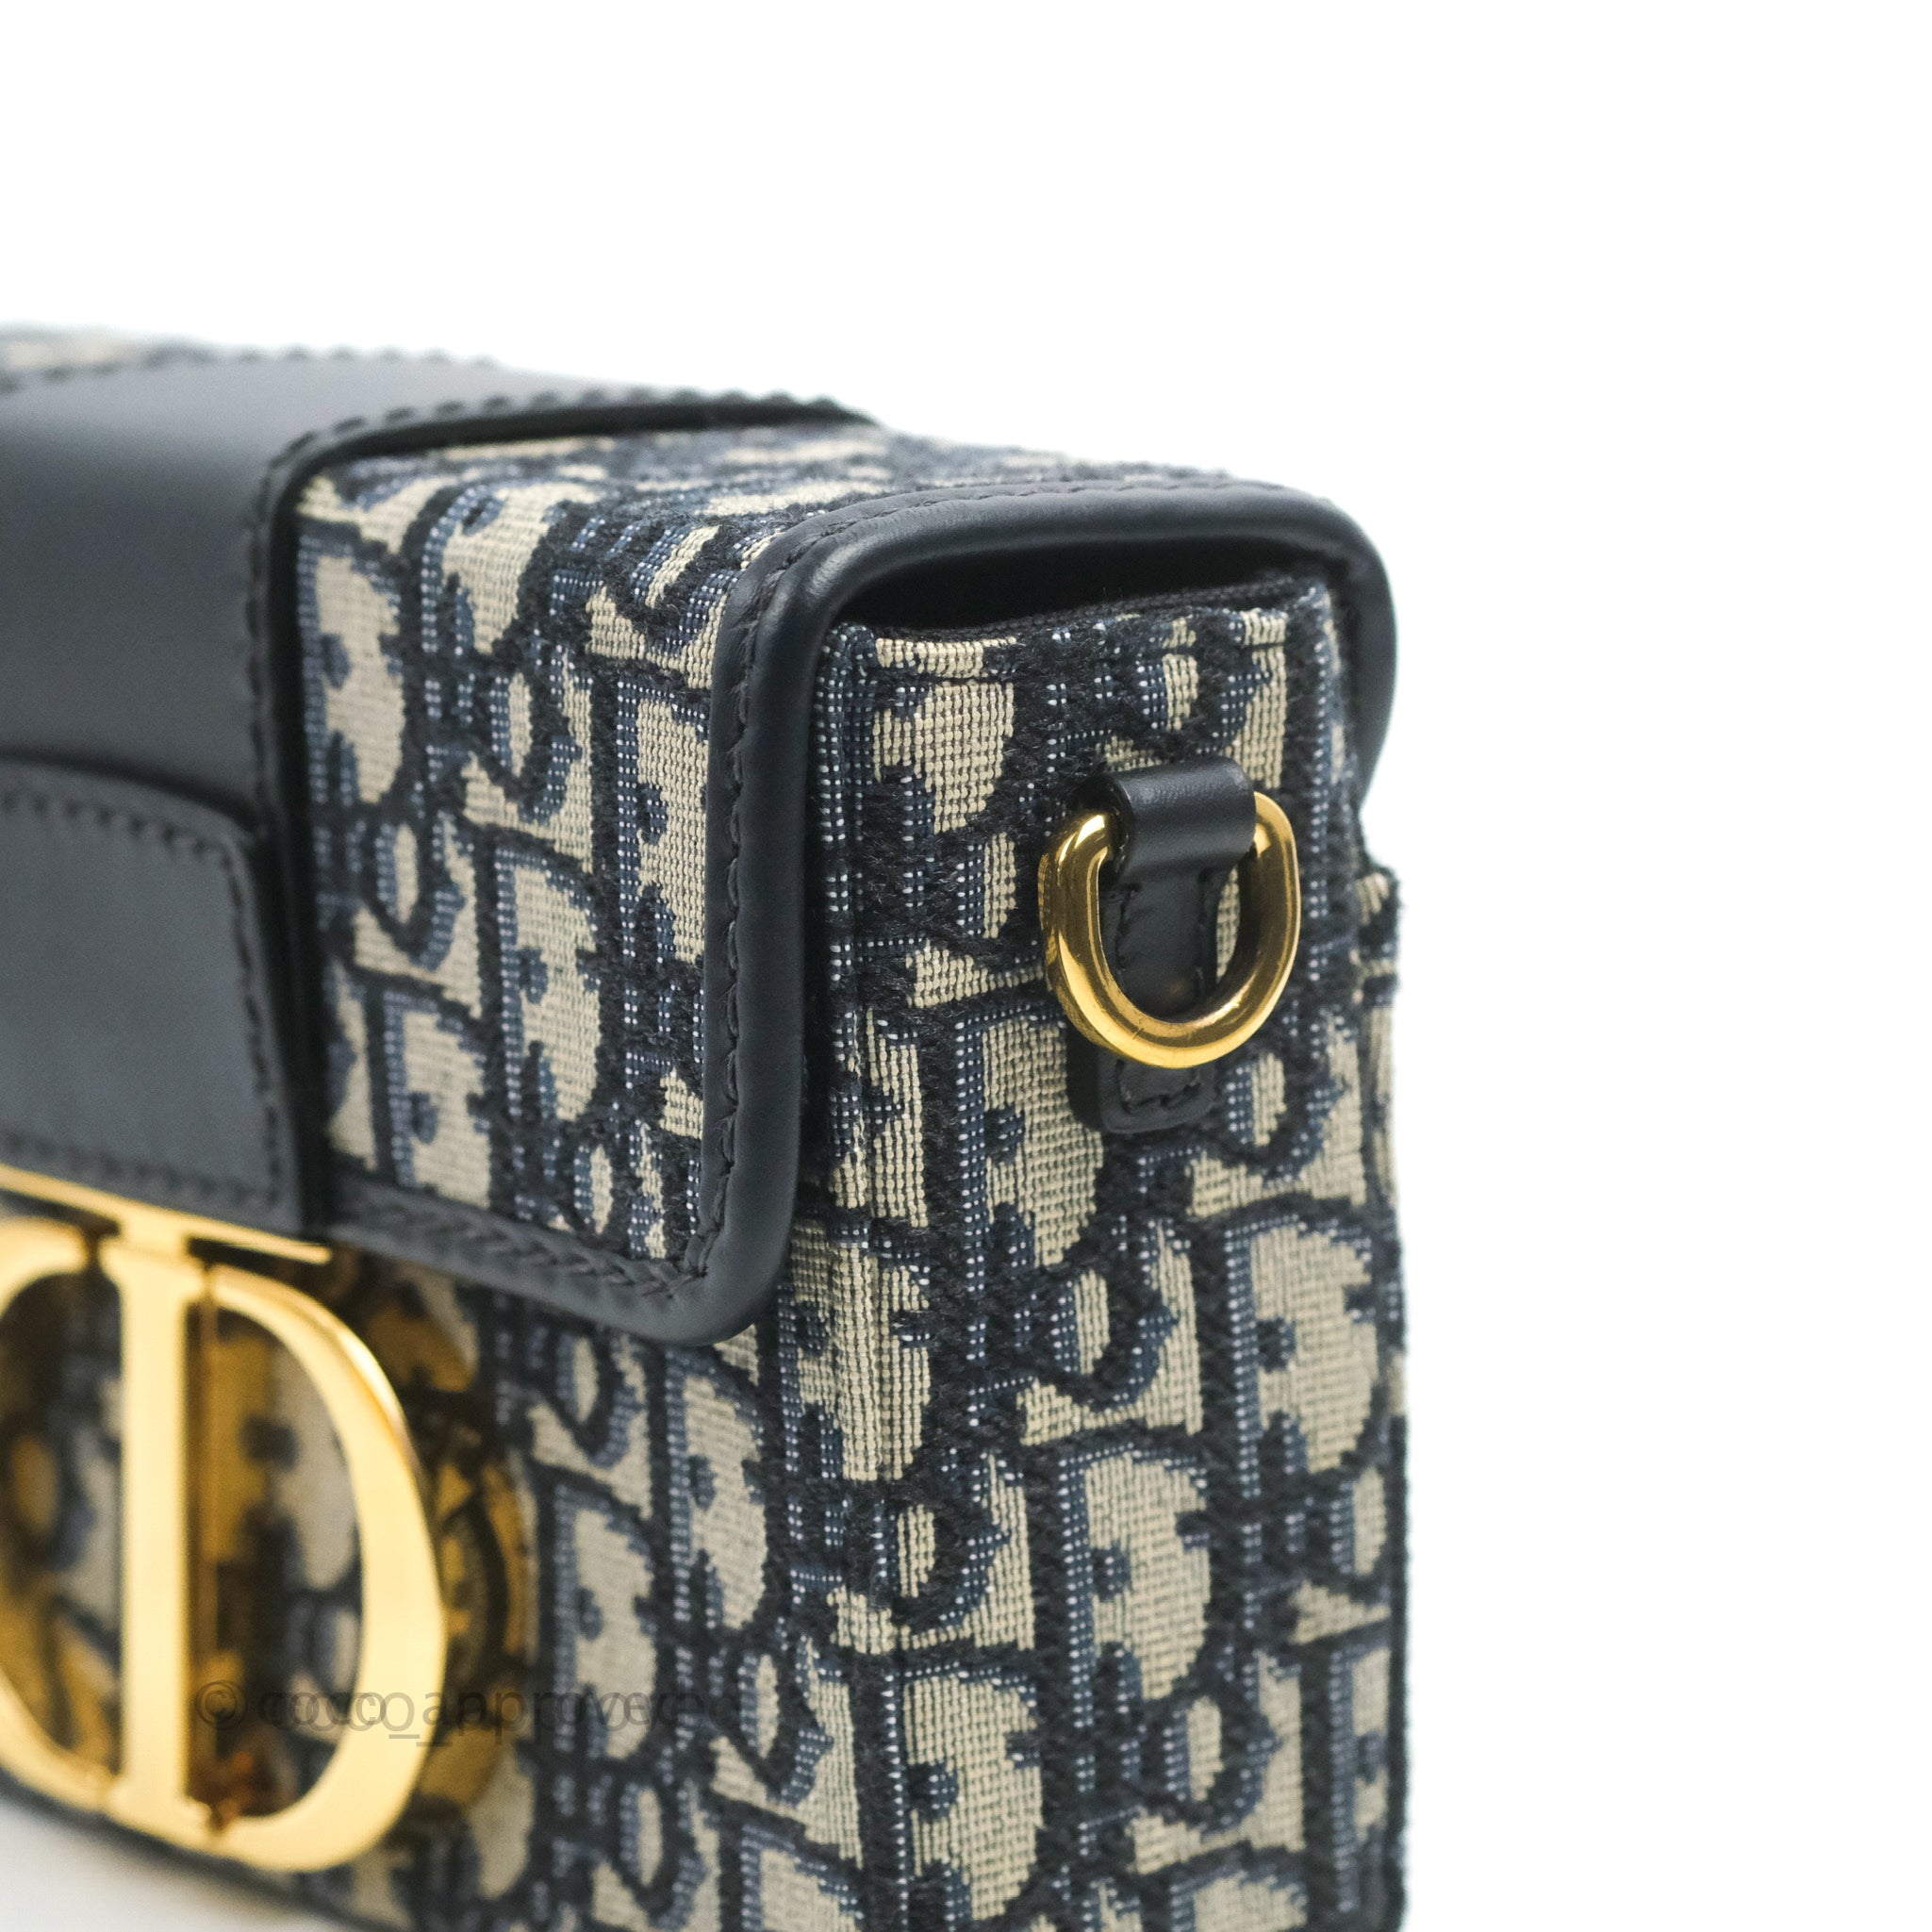 Dior 30 Montaigne Box Handbag